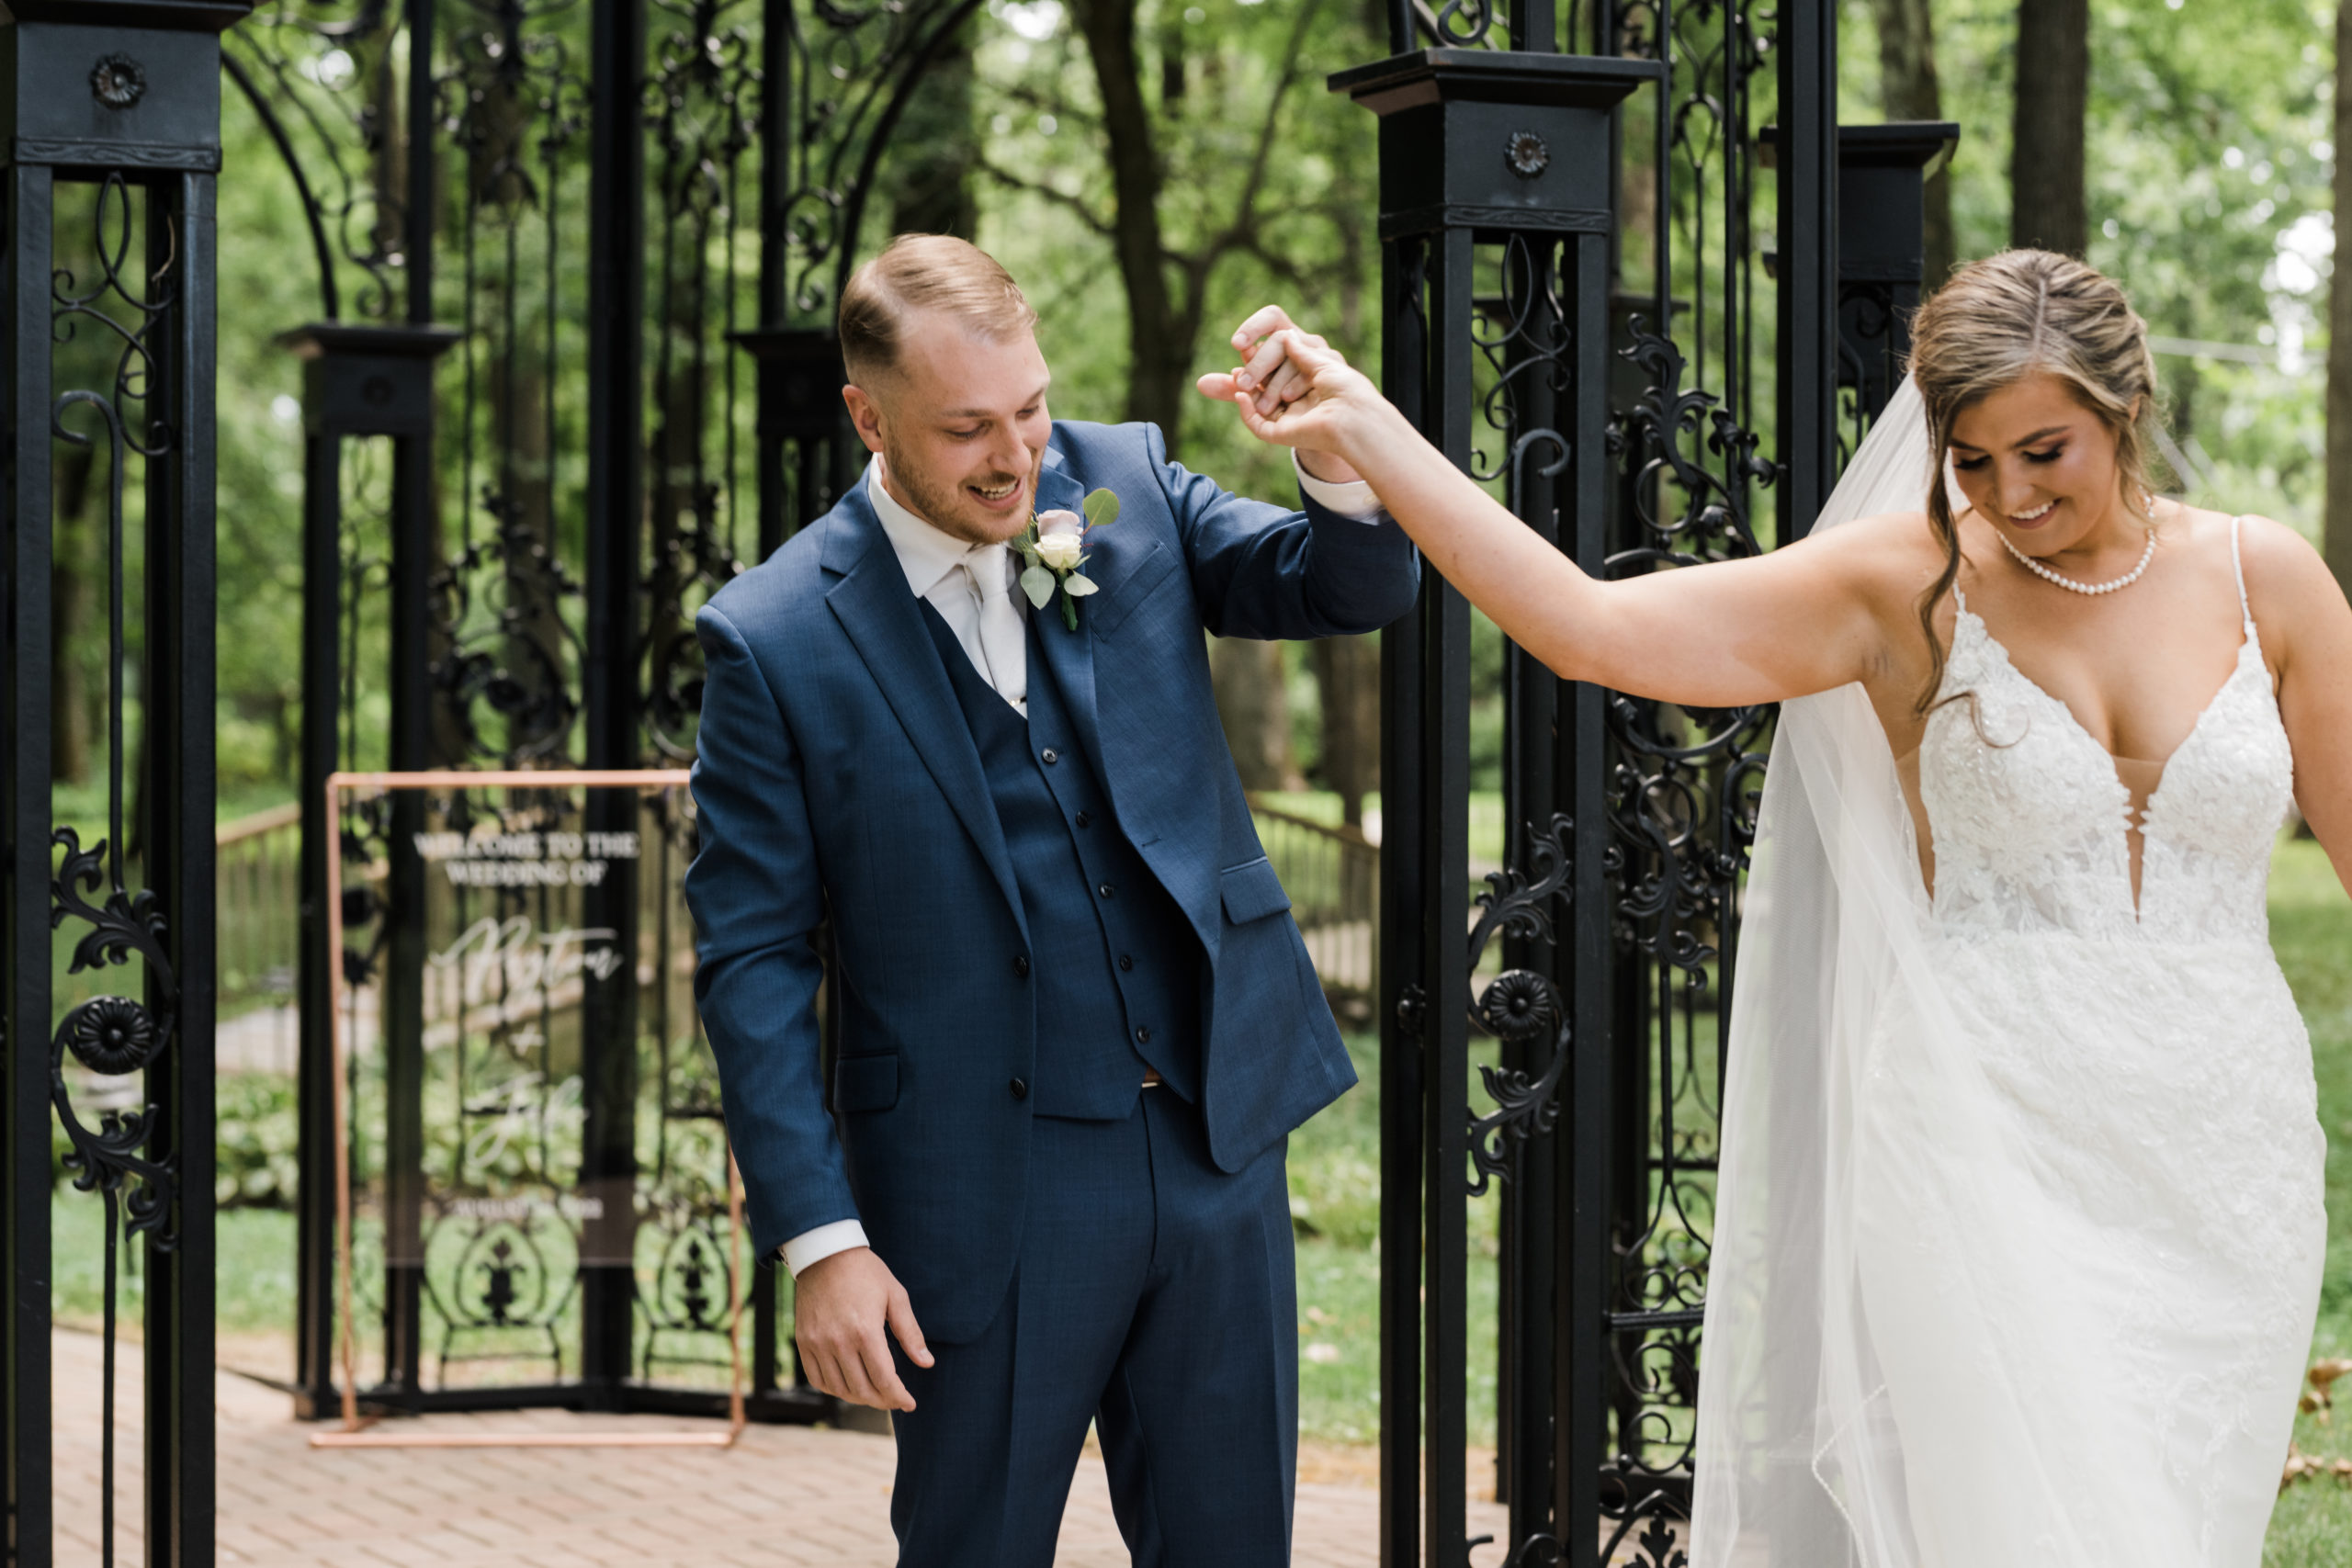 Wedding photographer captures groom's reaction first look Black Iris wedding Carmel, Indiana